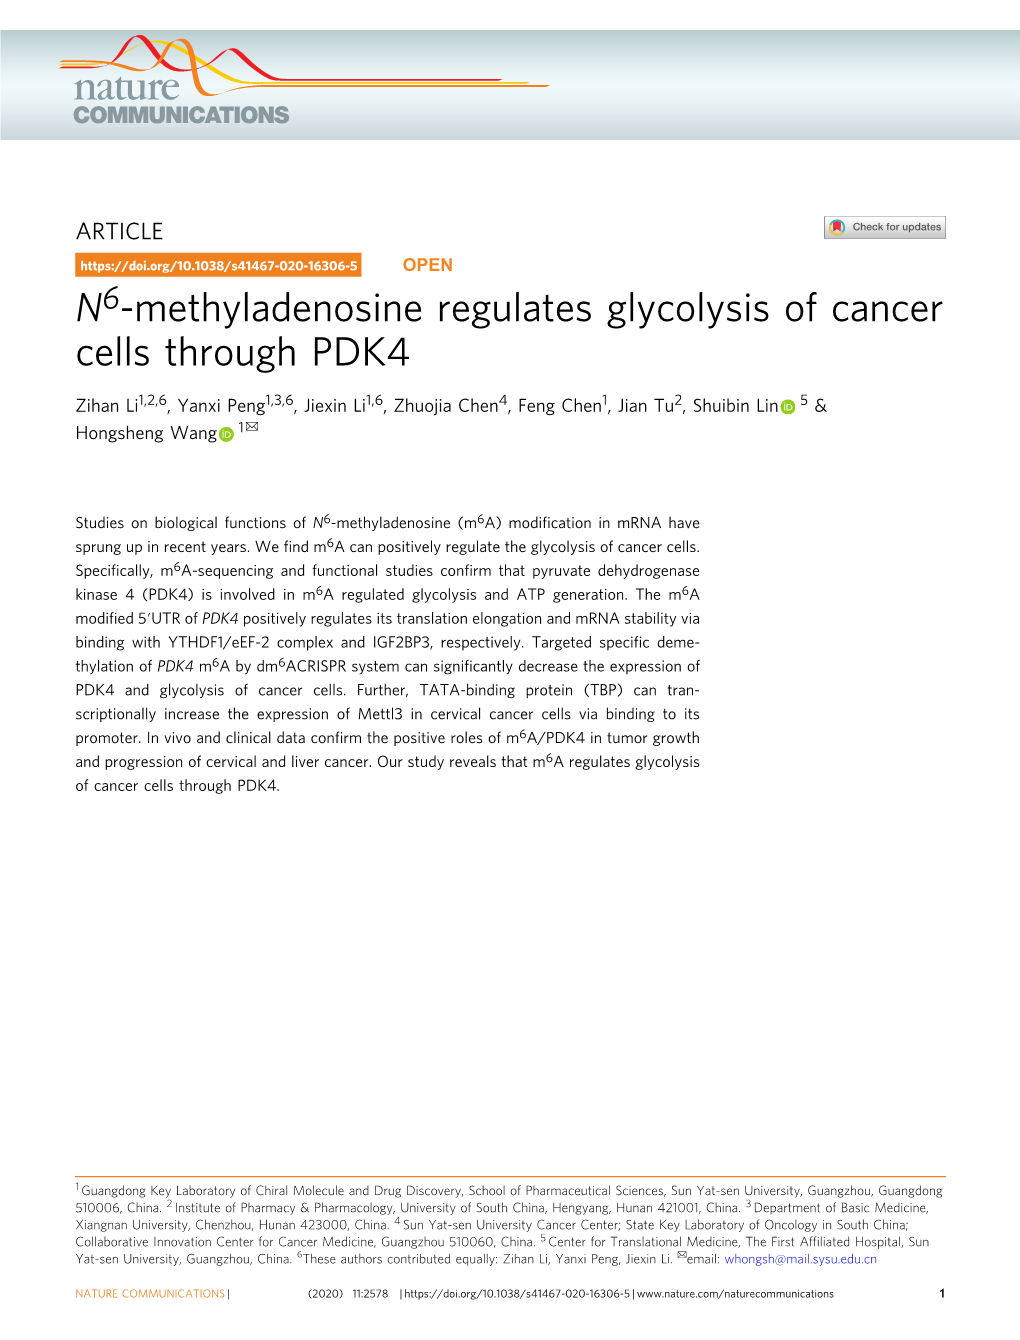 N6-Methyladenosine Regulates Glycolysis of Cancer Cells Through PDK4